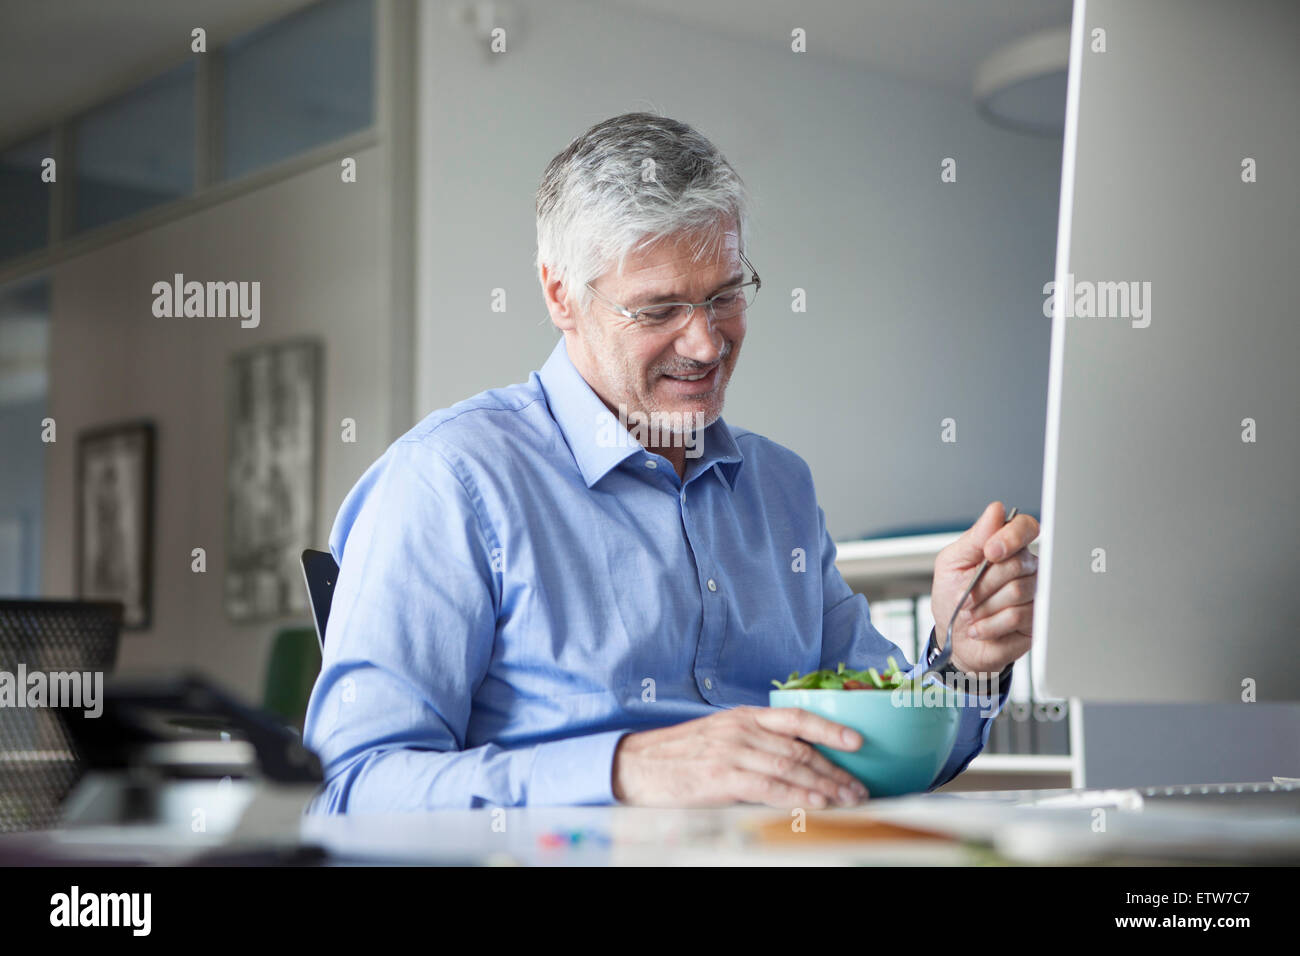 Businessman sitting at desk, eating salad Stock Photo